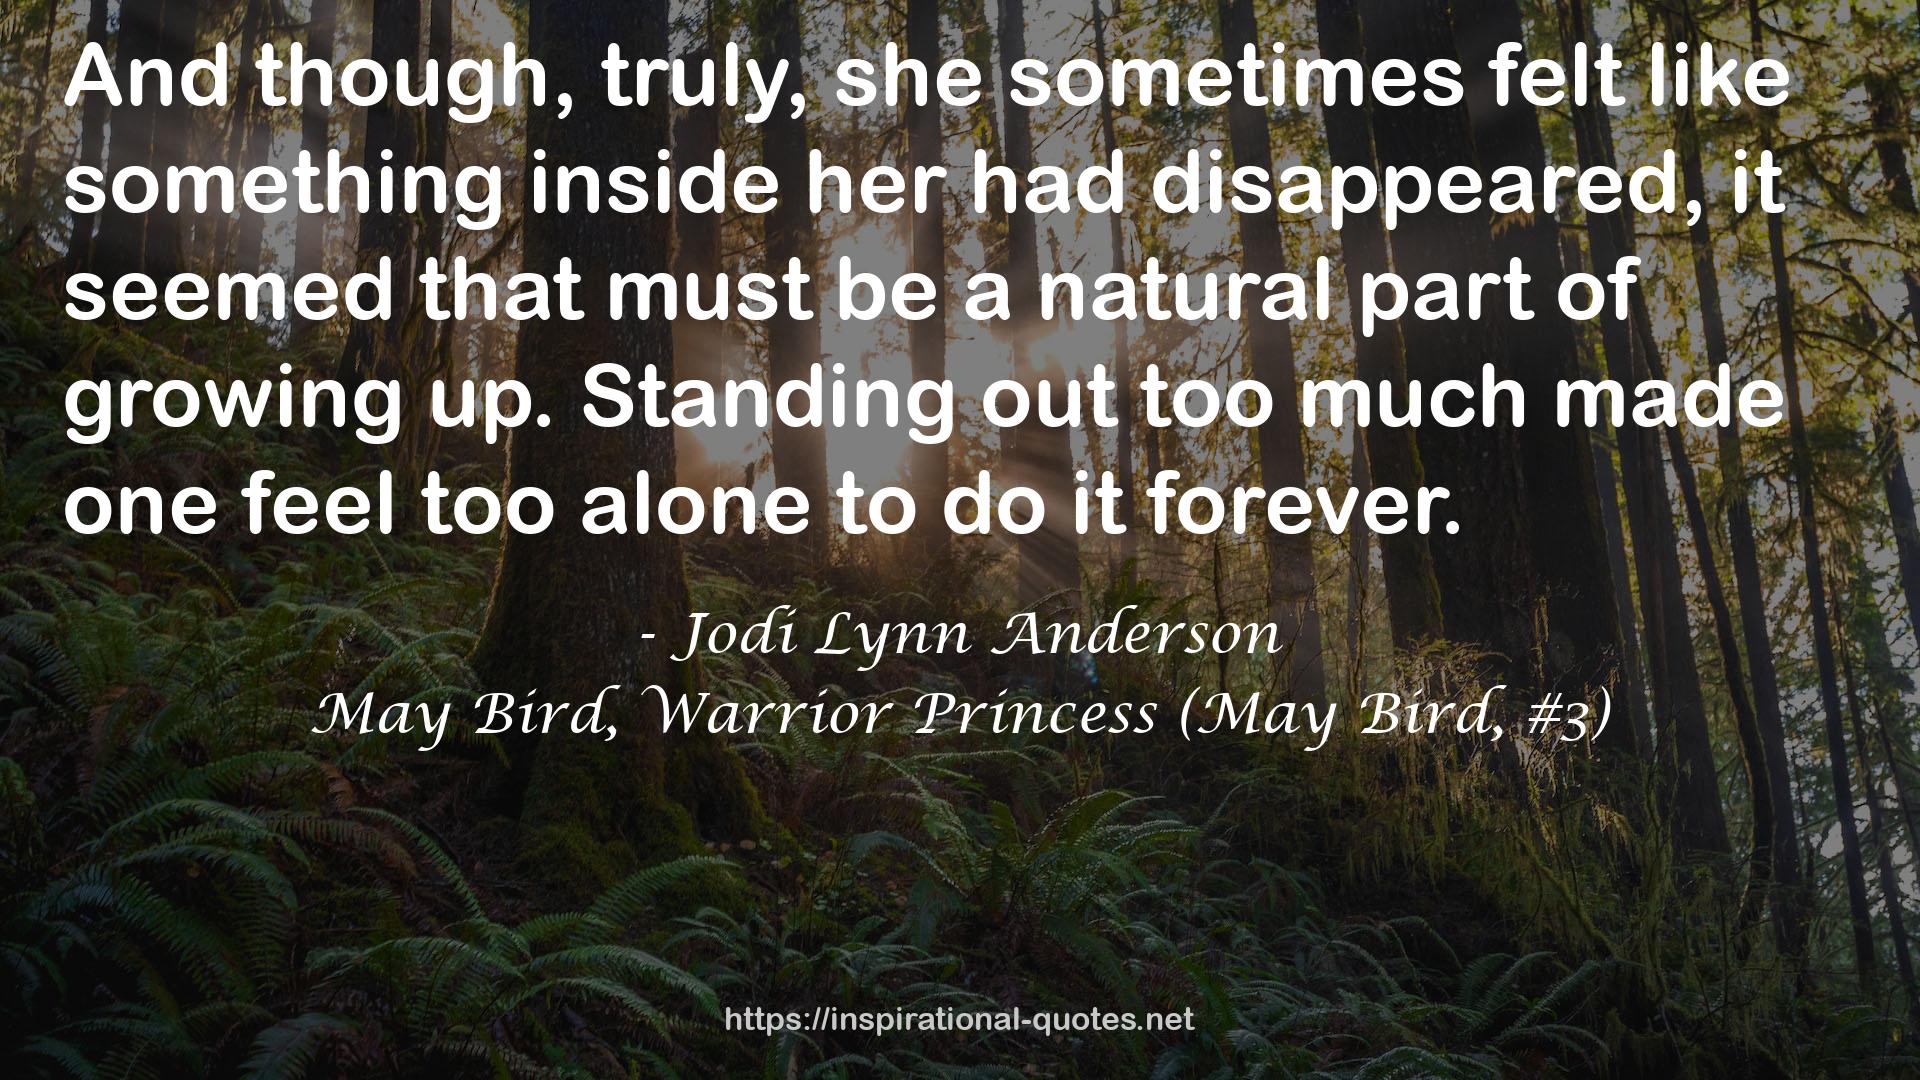 May Bird, Warrior Princess (May Bird, #3) QUOTES